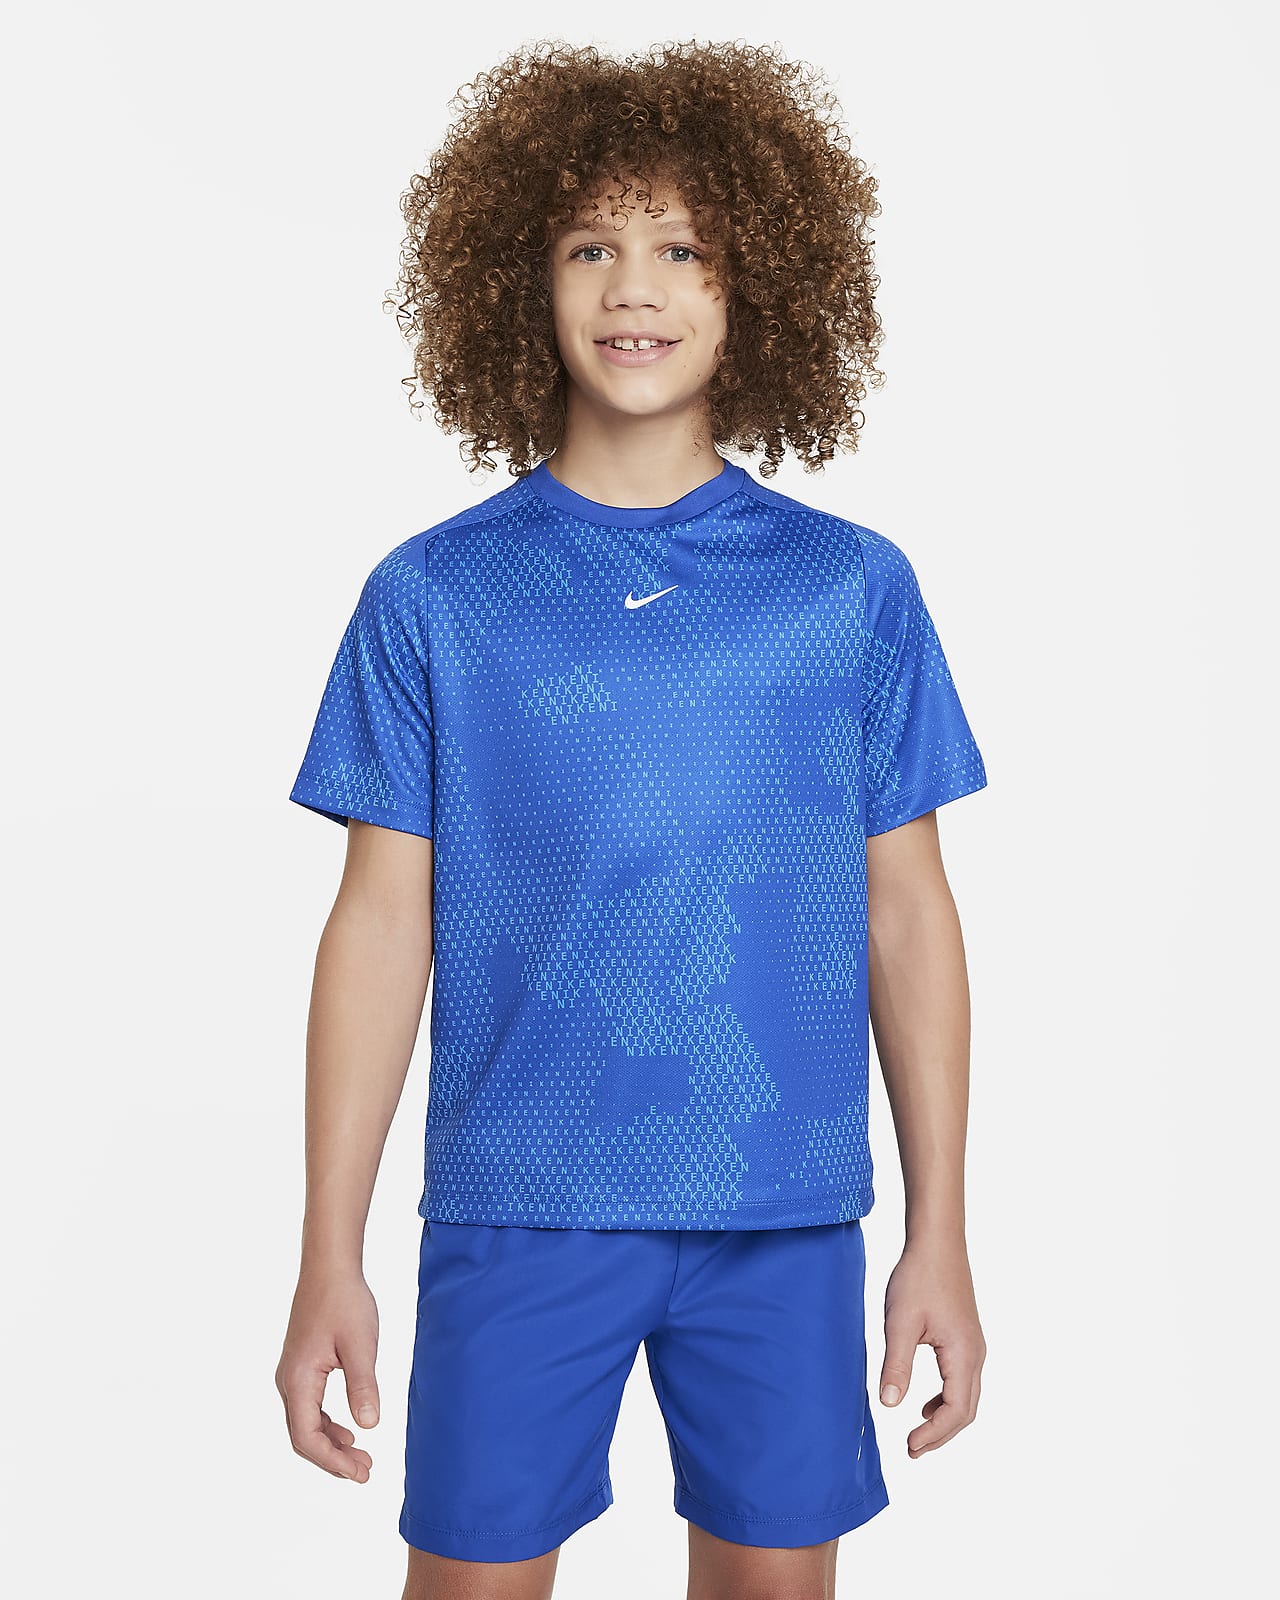 Nike Multi Older Kids' (Boys') Dri-FIT Short-Sleeve Top